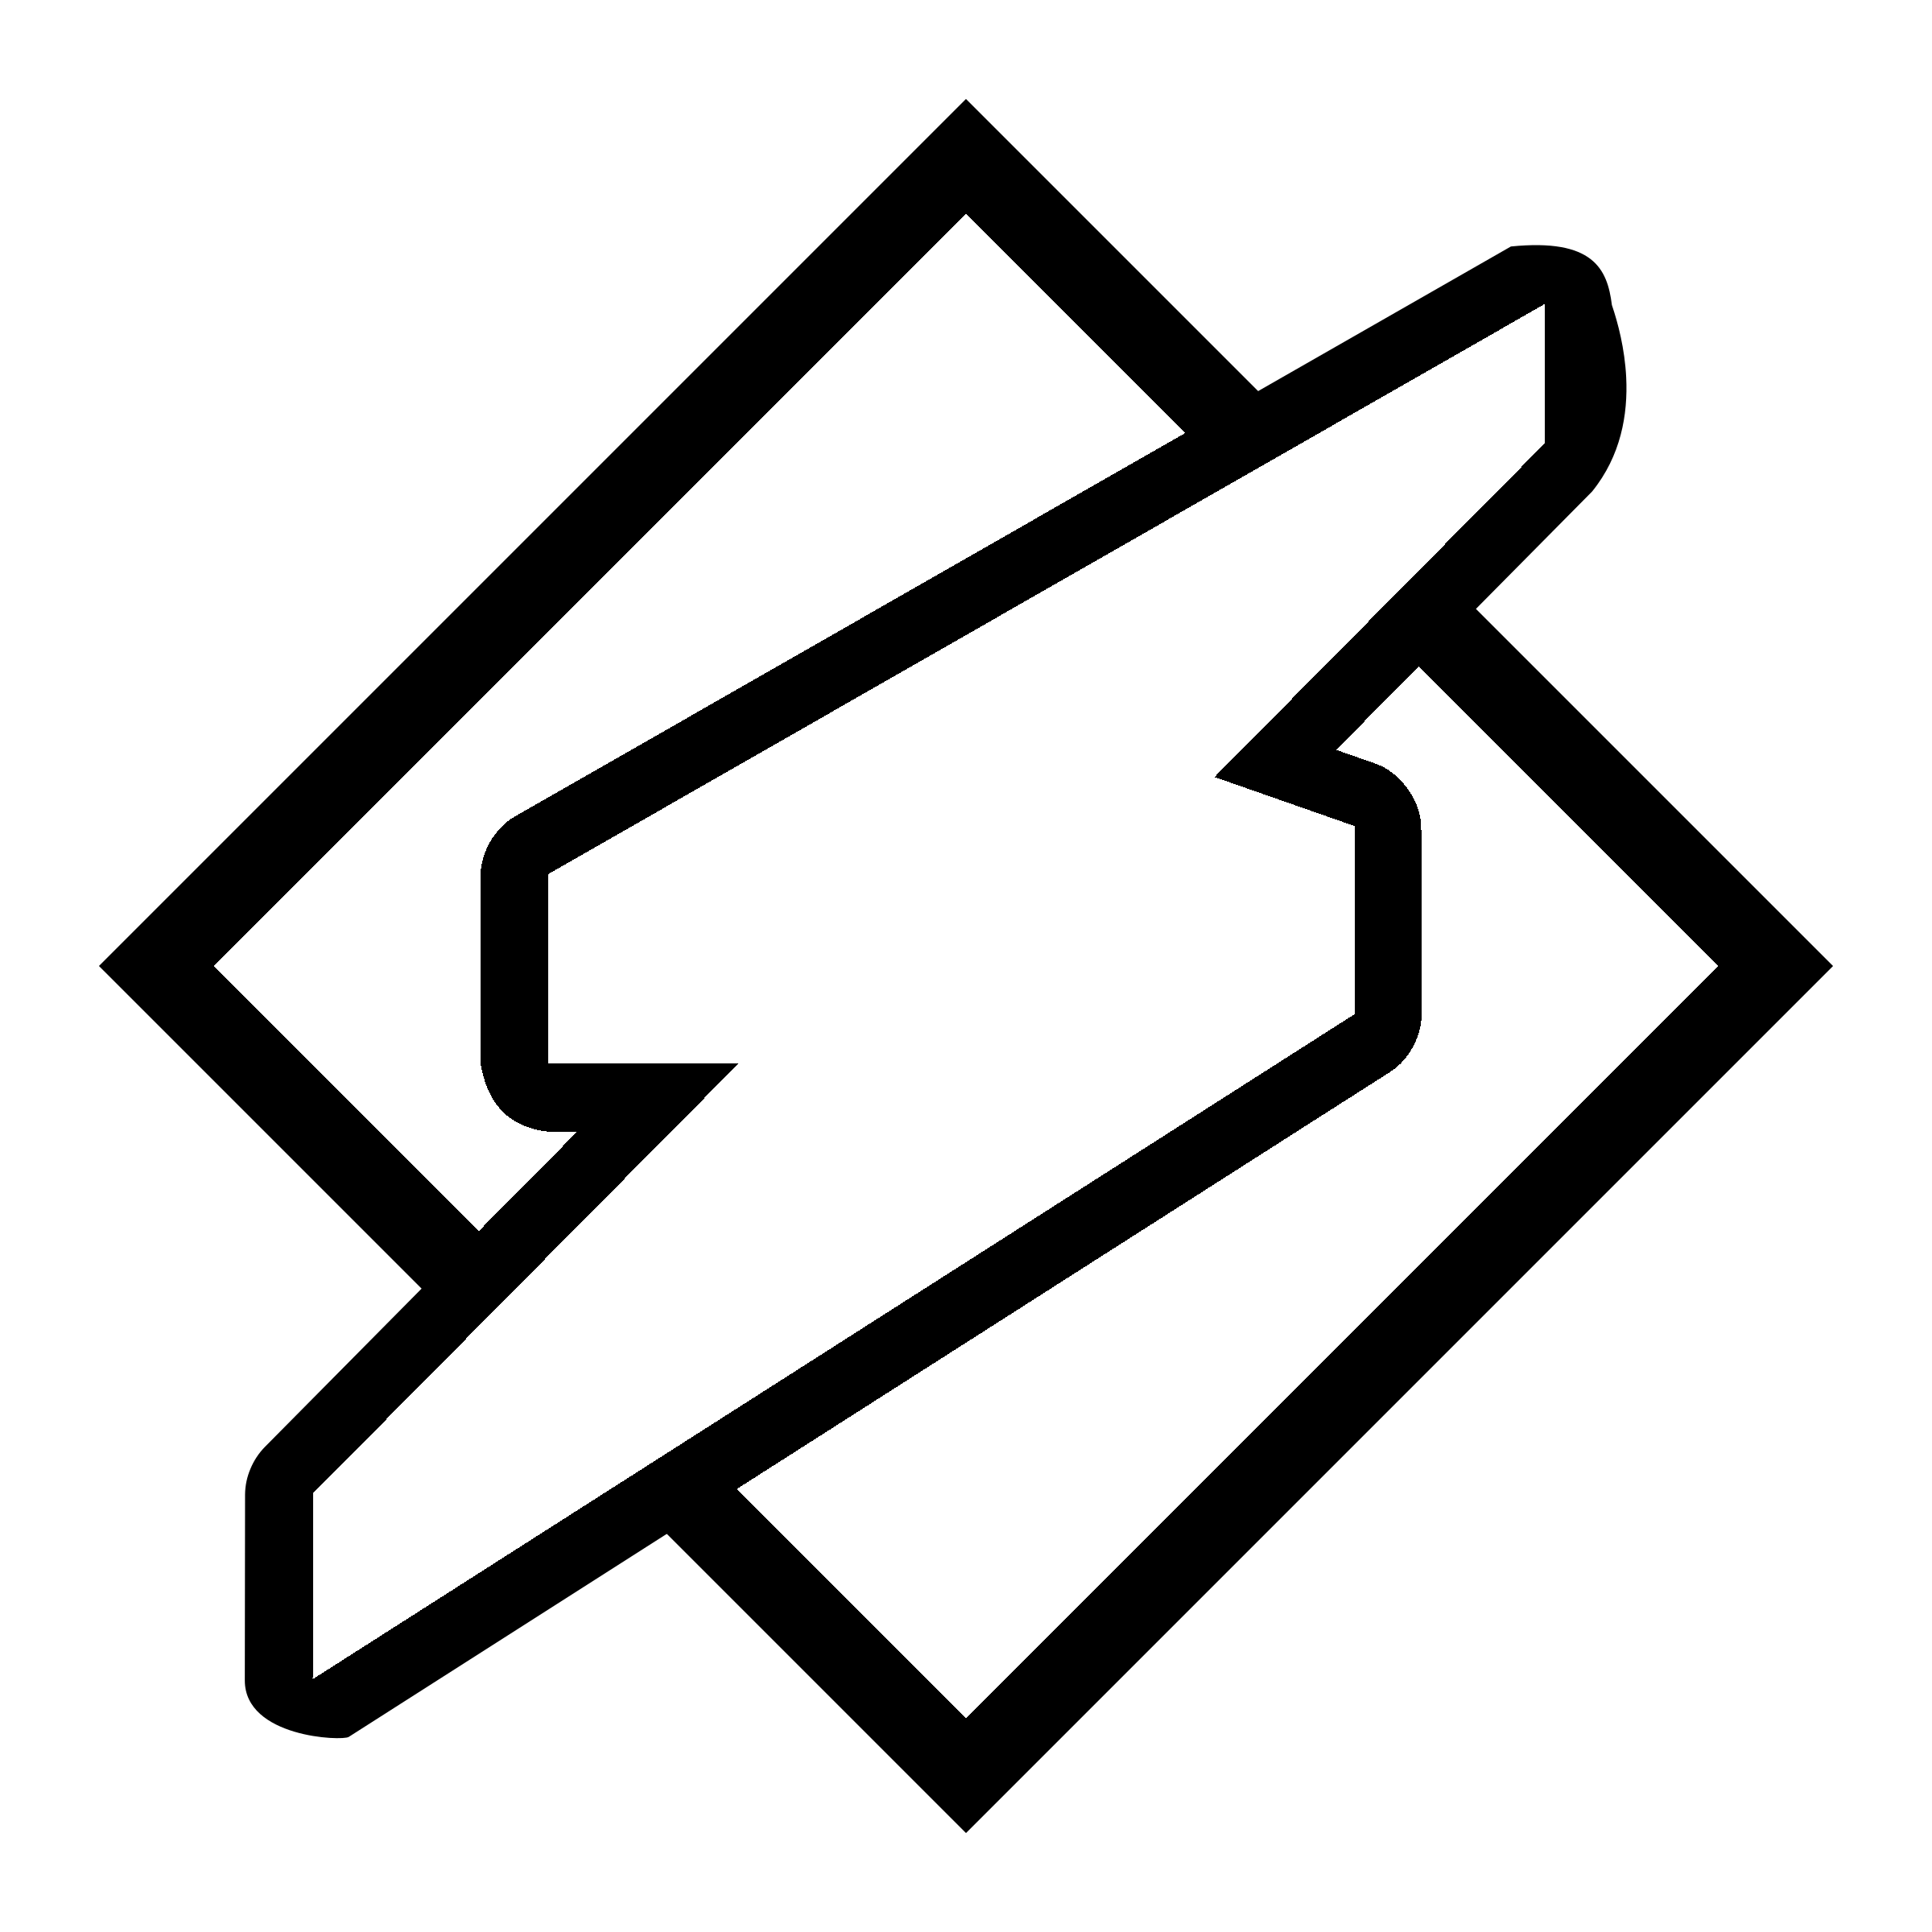 Winamp Logo - Winamp Logo PNG Transparent & SVG Vector - Freebie Supply